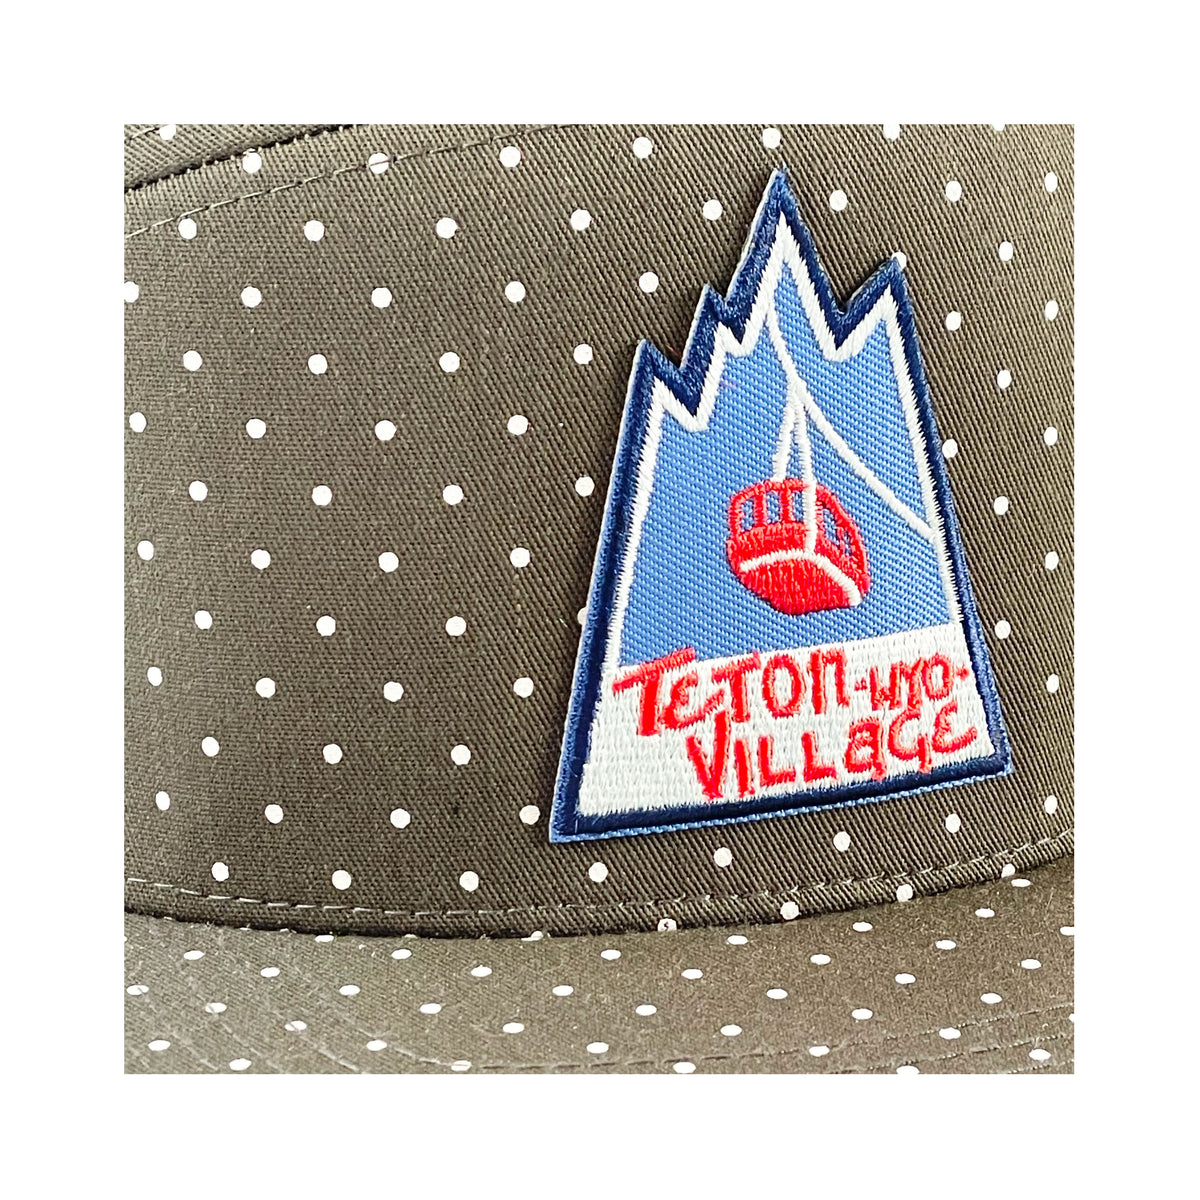 Teton Village Flat Brim Hat in Green with White Polka Dots